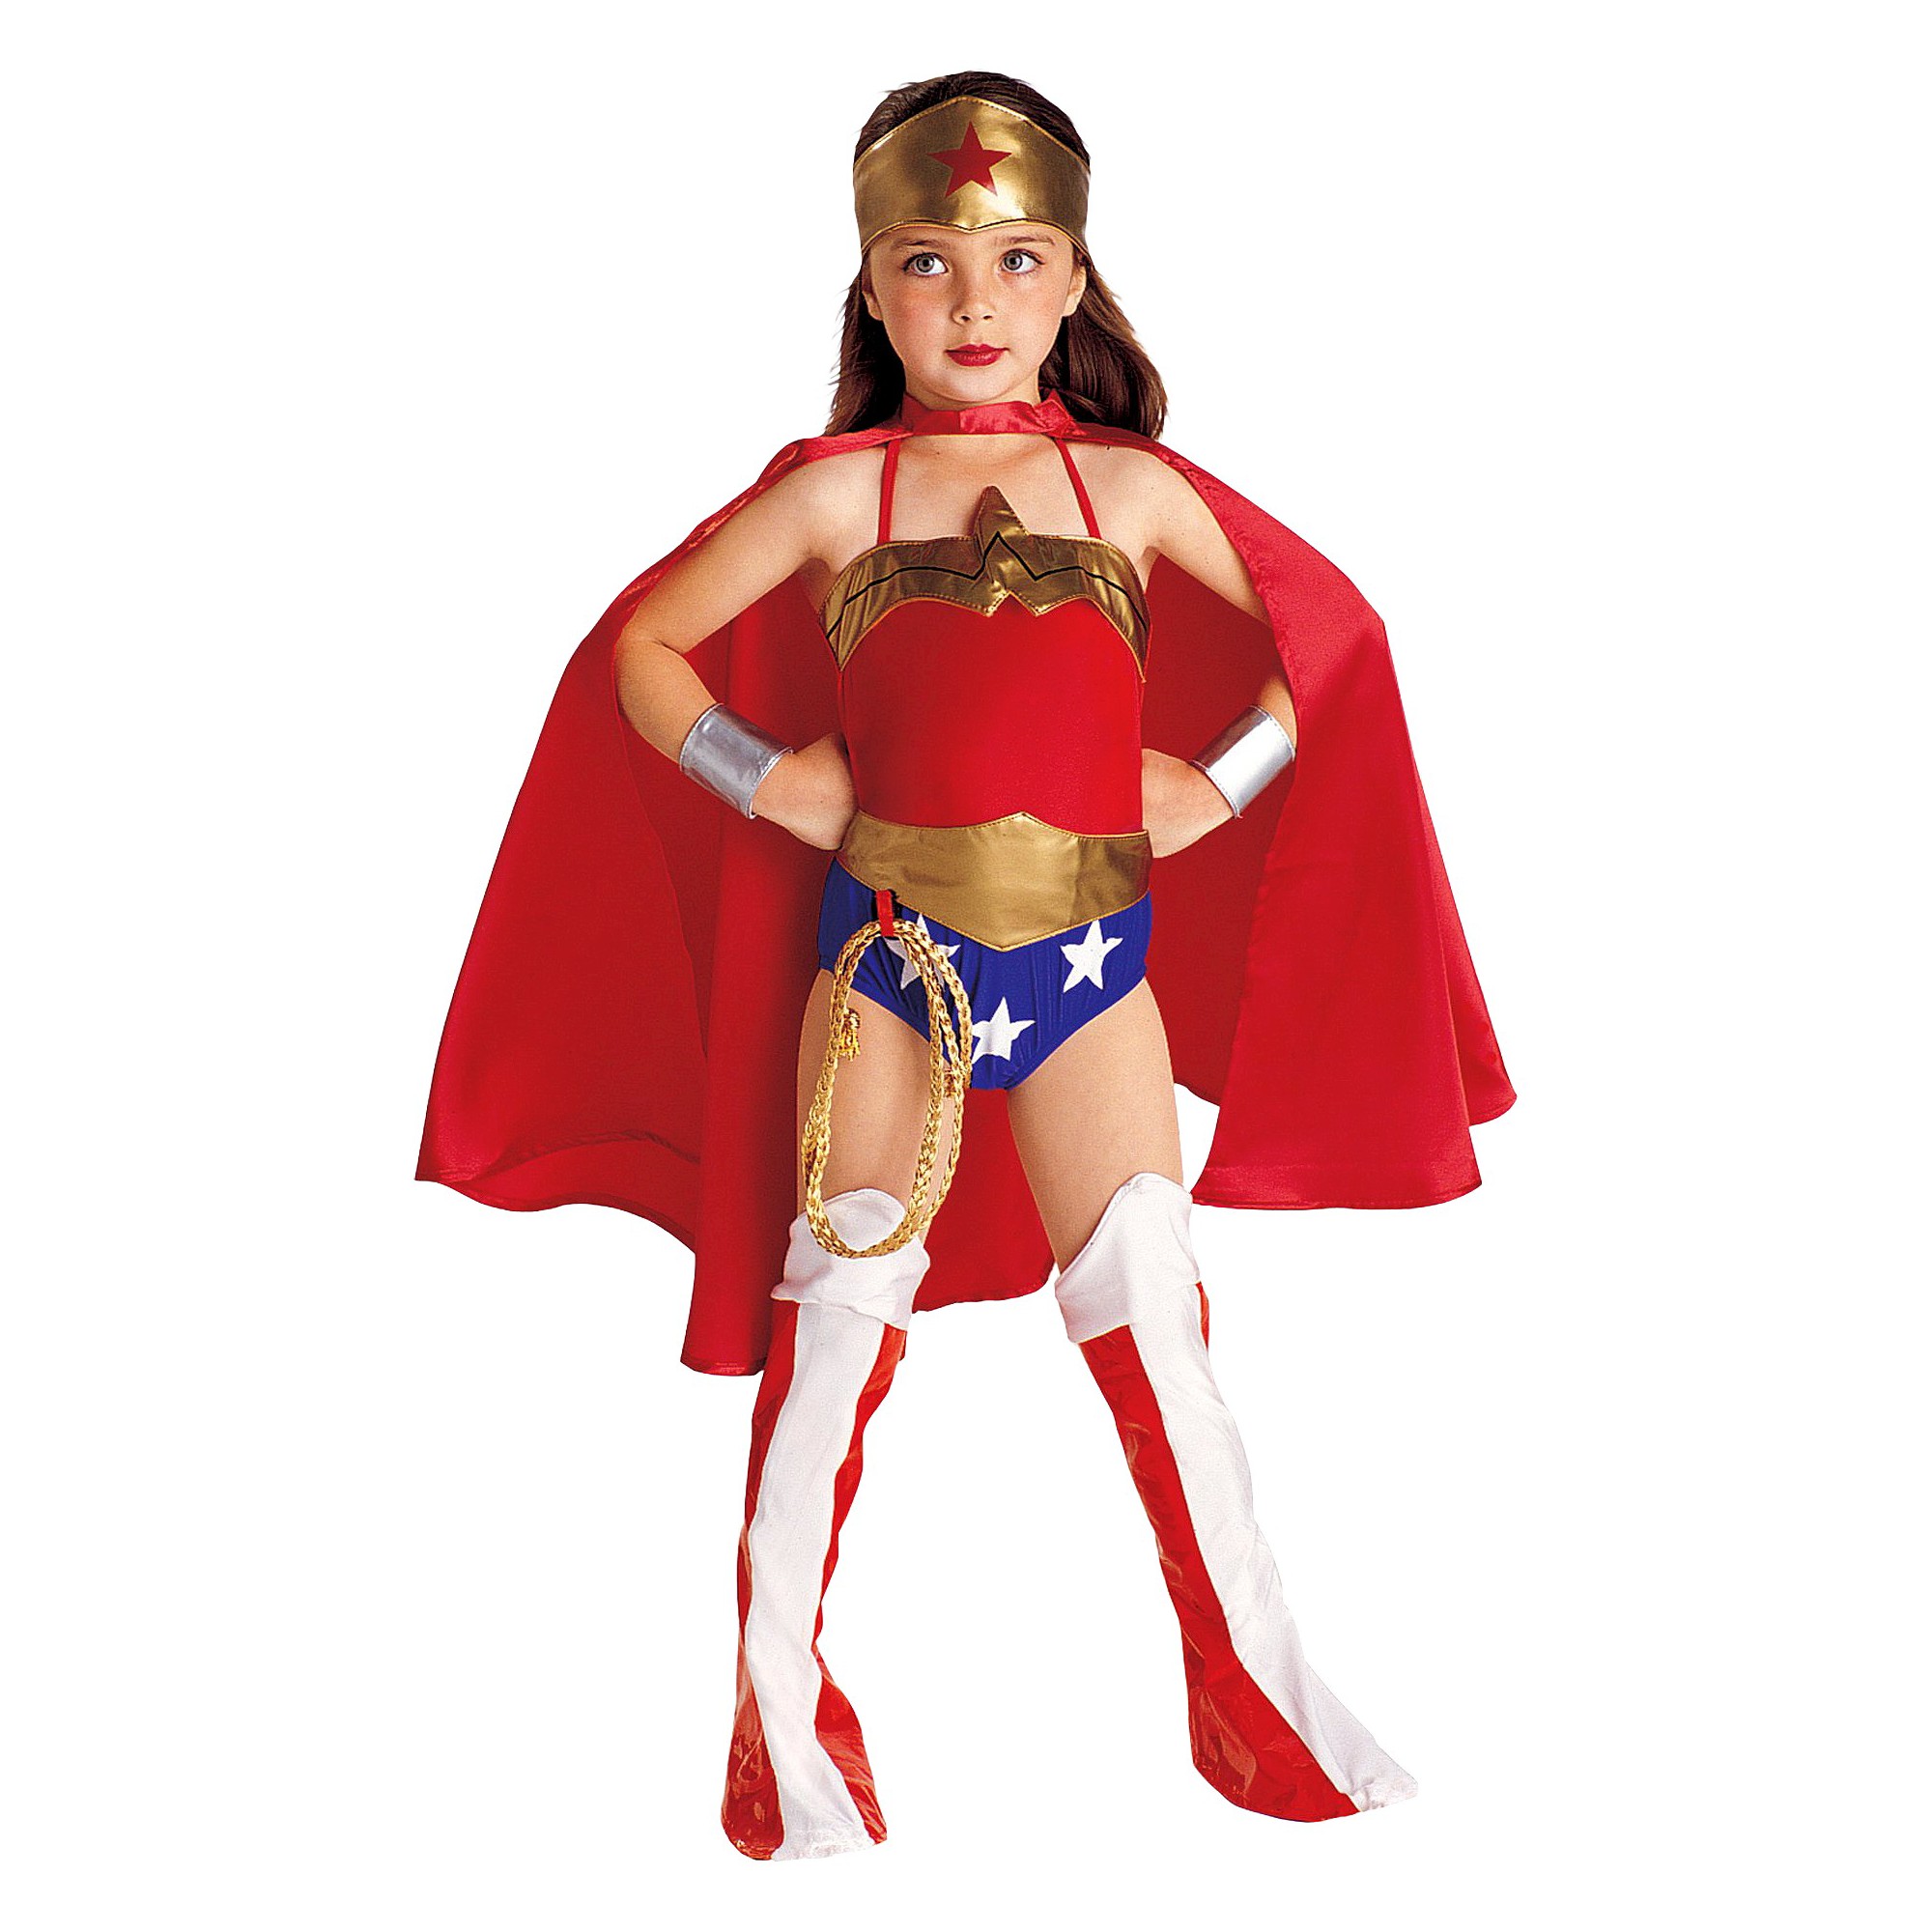 Halloween Kids' Wonder Woman Costume - S (4-6), Women's, Size: Small(4-6)